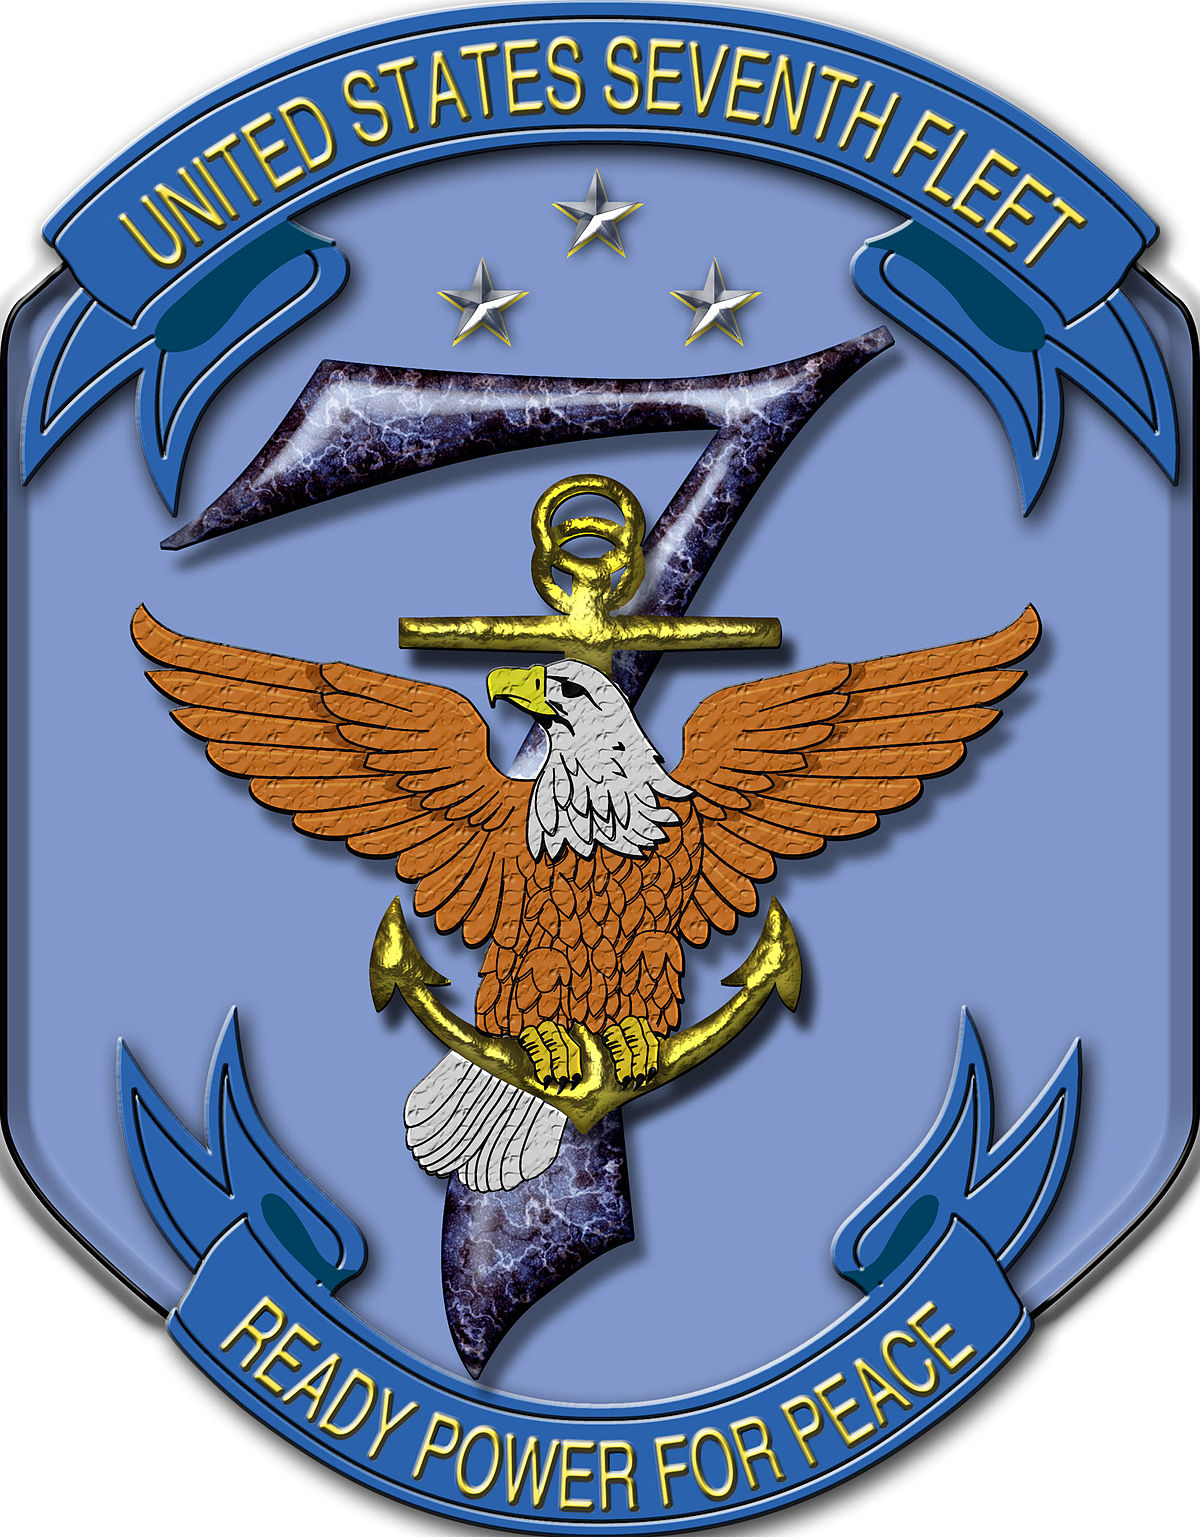 1200px-United_States_Seventh_Fleet_-logo_%28hi-res%29.jpg